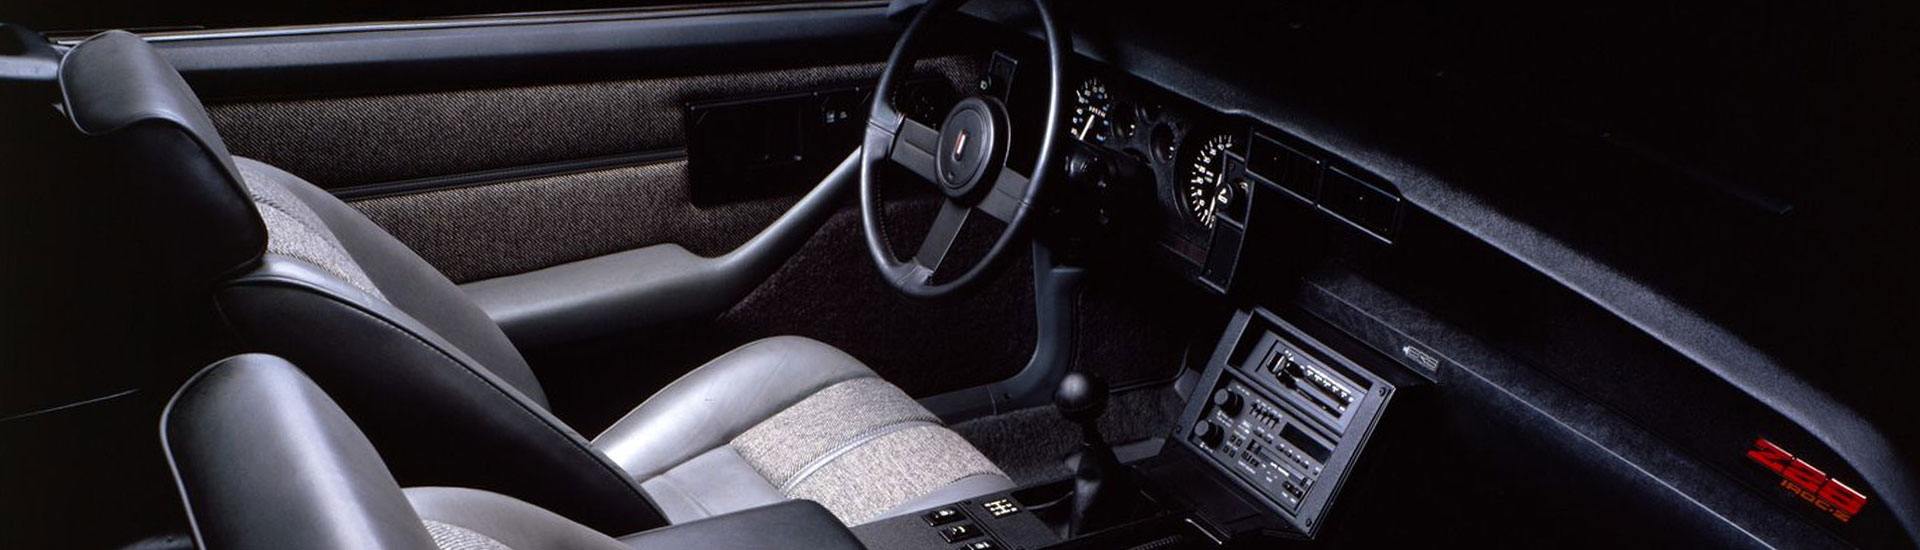 1988 Chevrolet Camaro Dash Kits